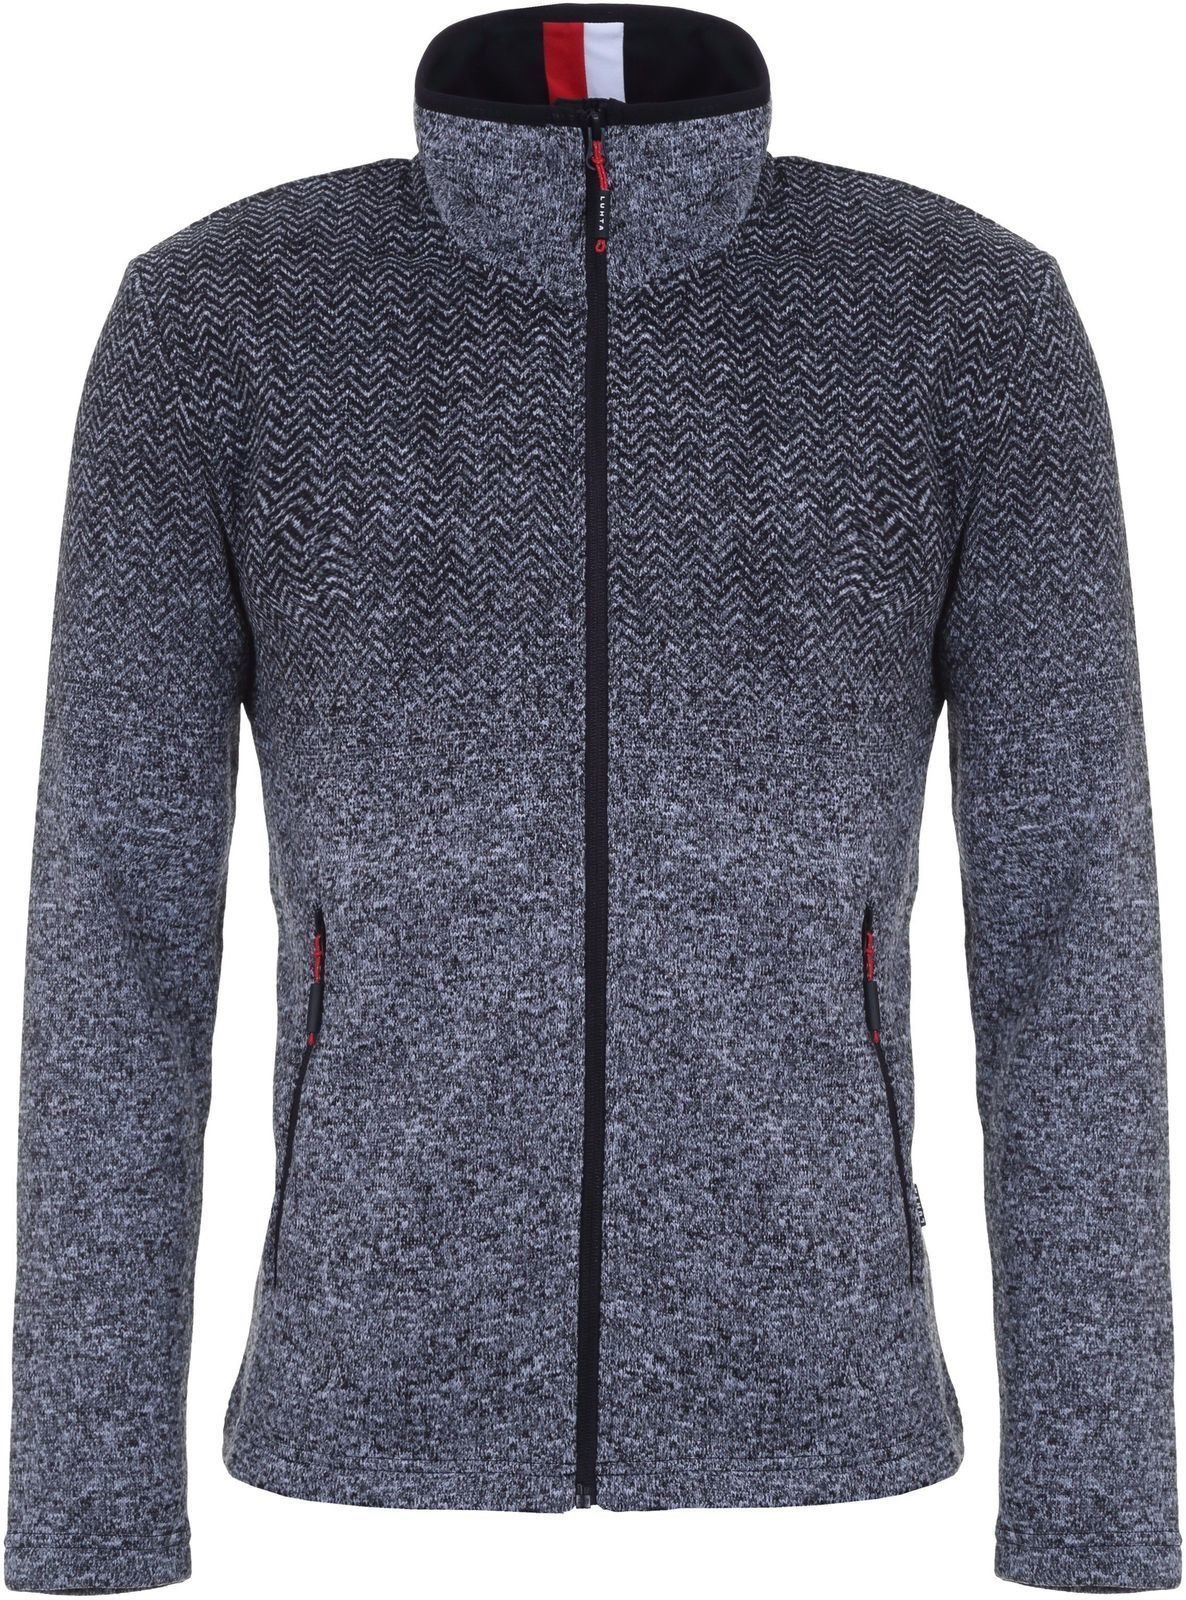 Majica, jopa Luhta Kaivola Mens Sweater Lead Grey XL Skakalec